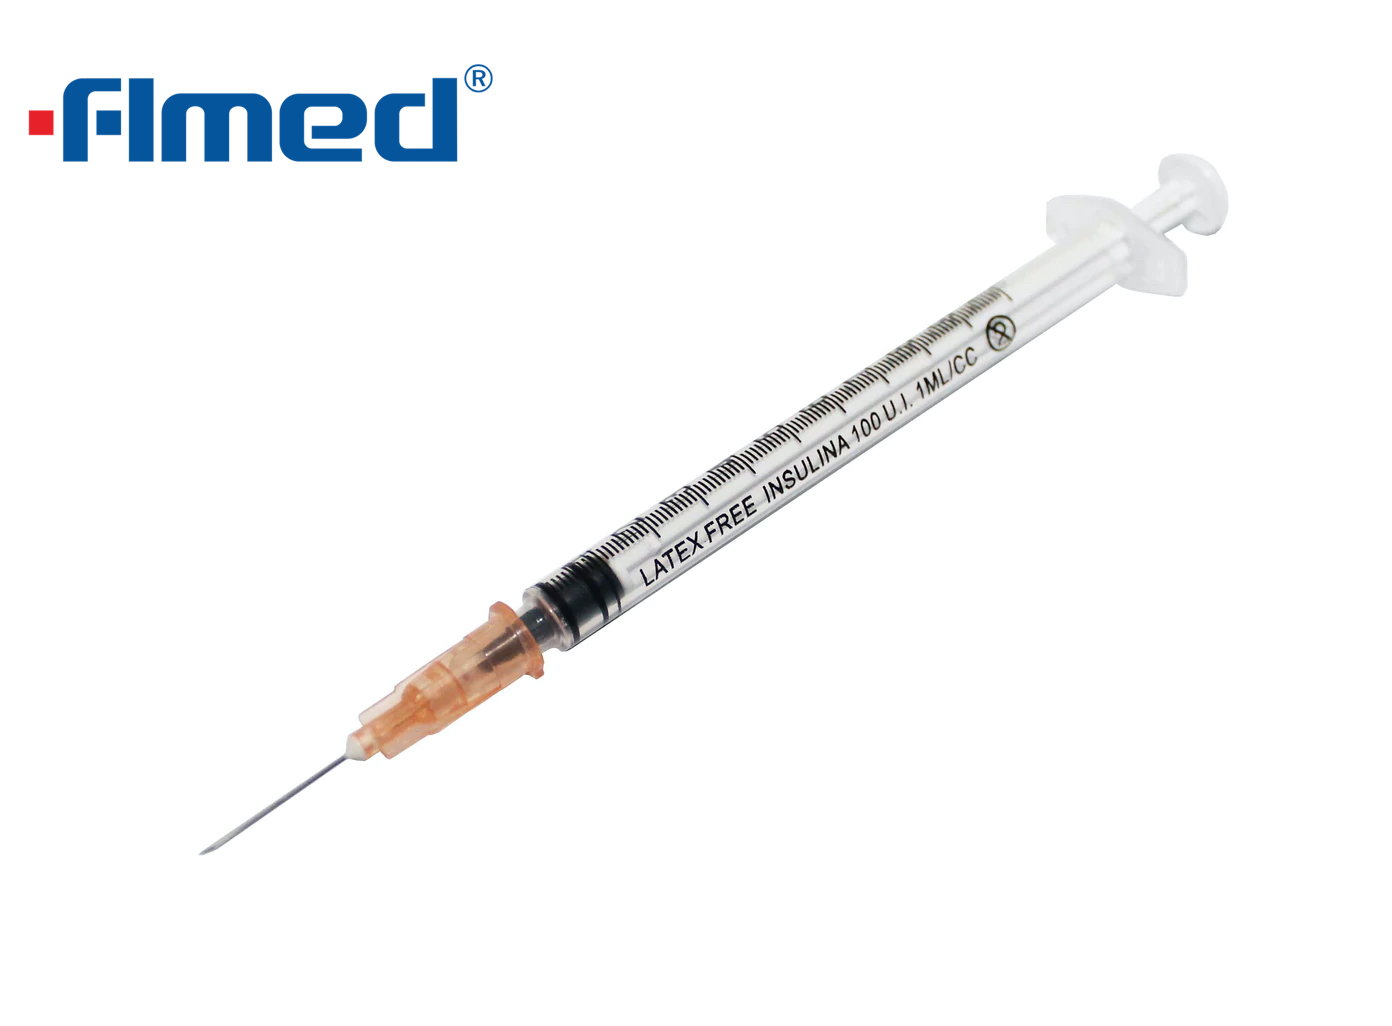 1ml Insulinspritze & Nadel 25g x 16 mm CE markiert